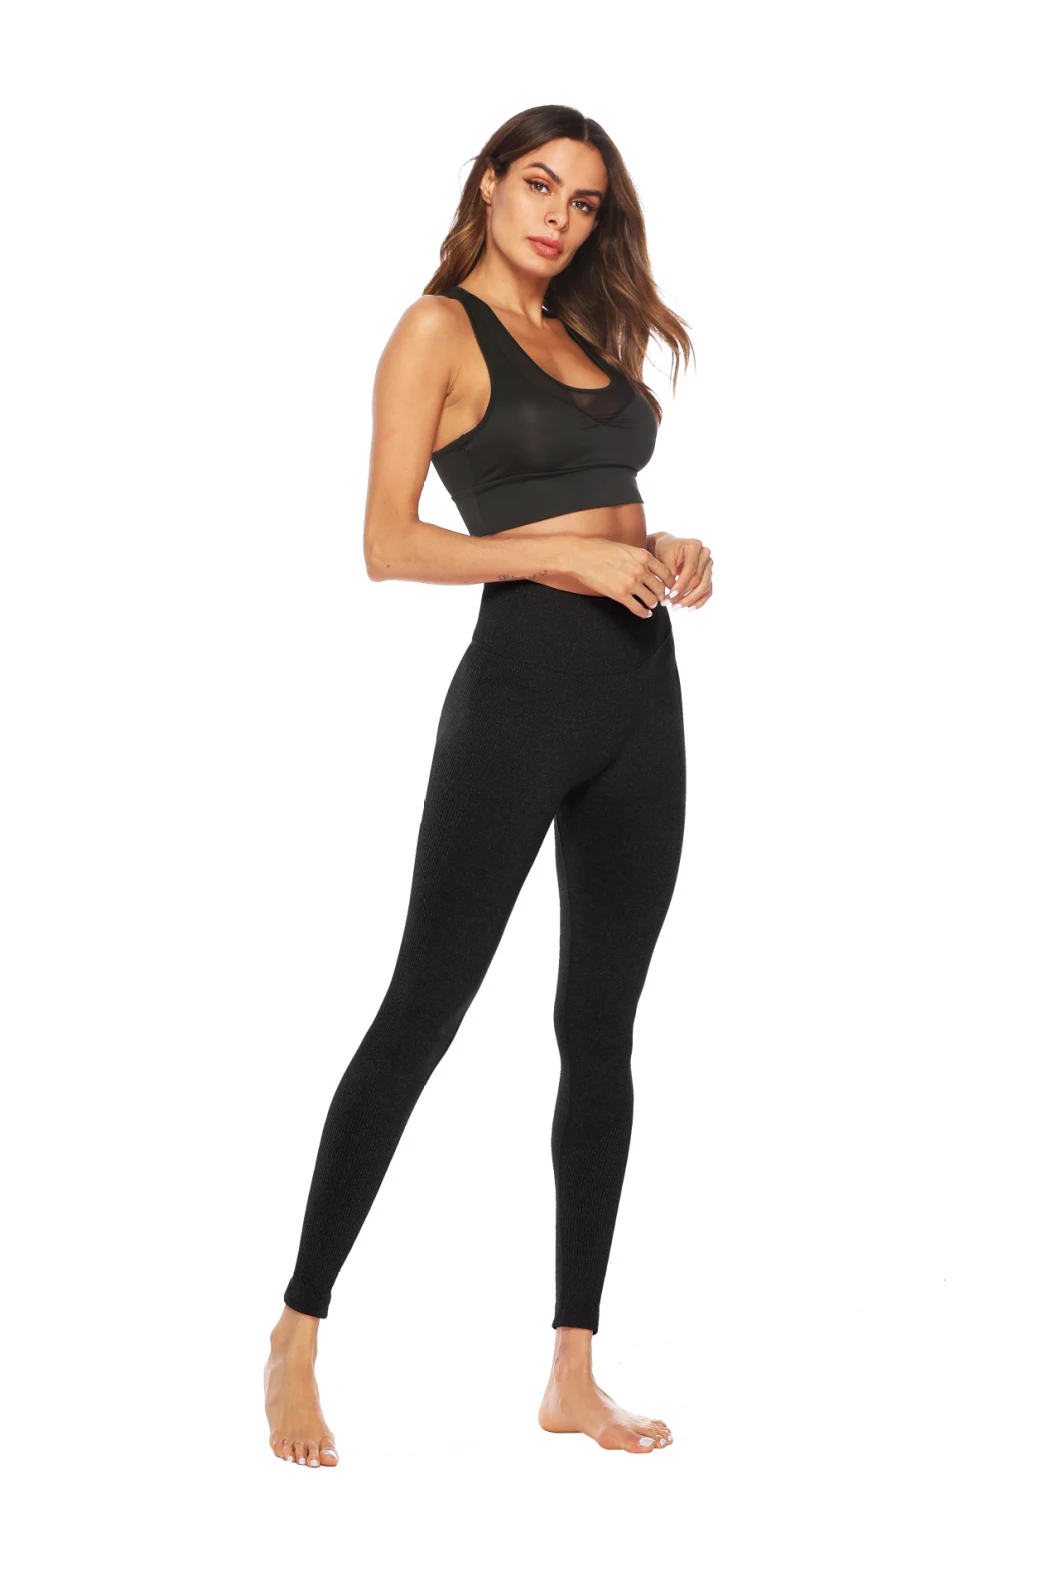 Women Fitness Striped Yoga Pants High Waist Leggings Push up Tight Sportswear Workout Sport Gym Leggings